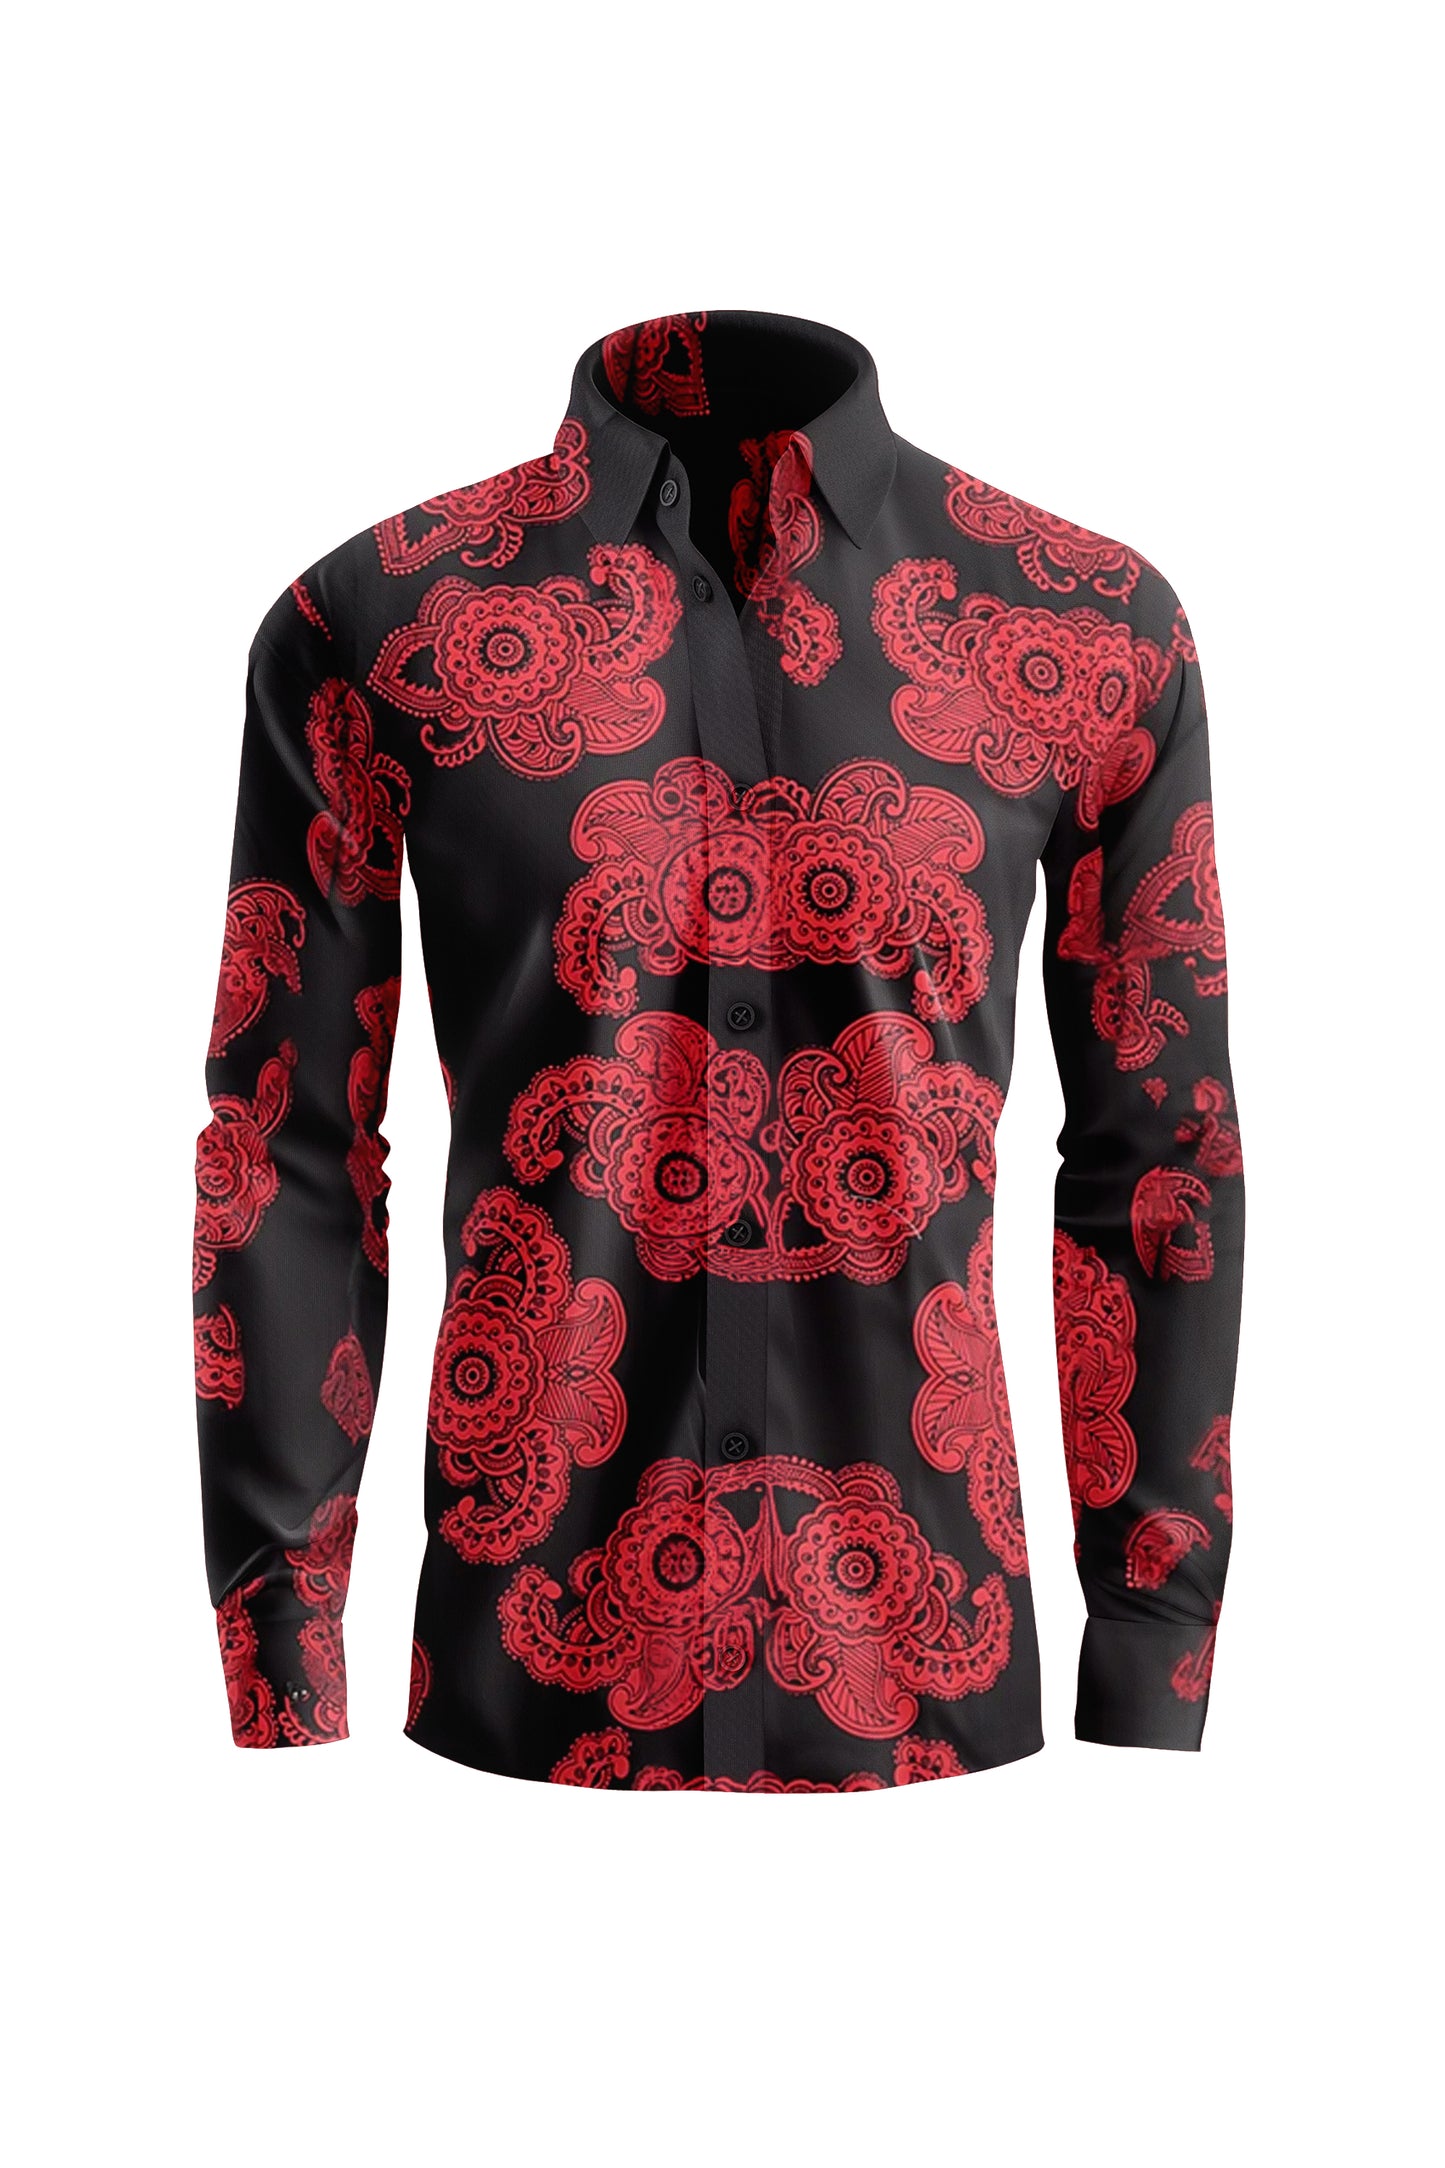 Crimson Rhapsody Printed Casual Shirt CASUAL SHIRT On Sale 30% Off Vercini